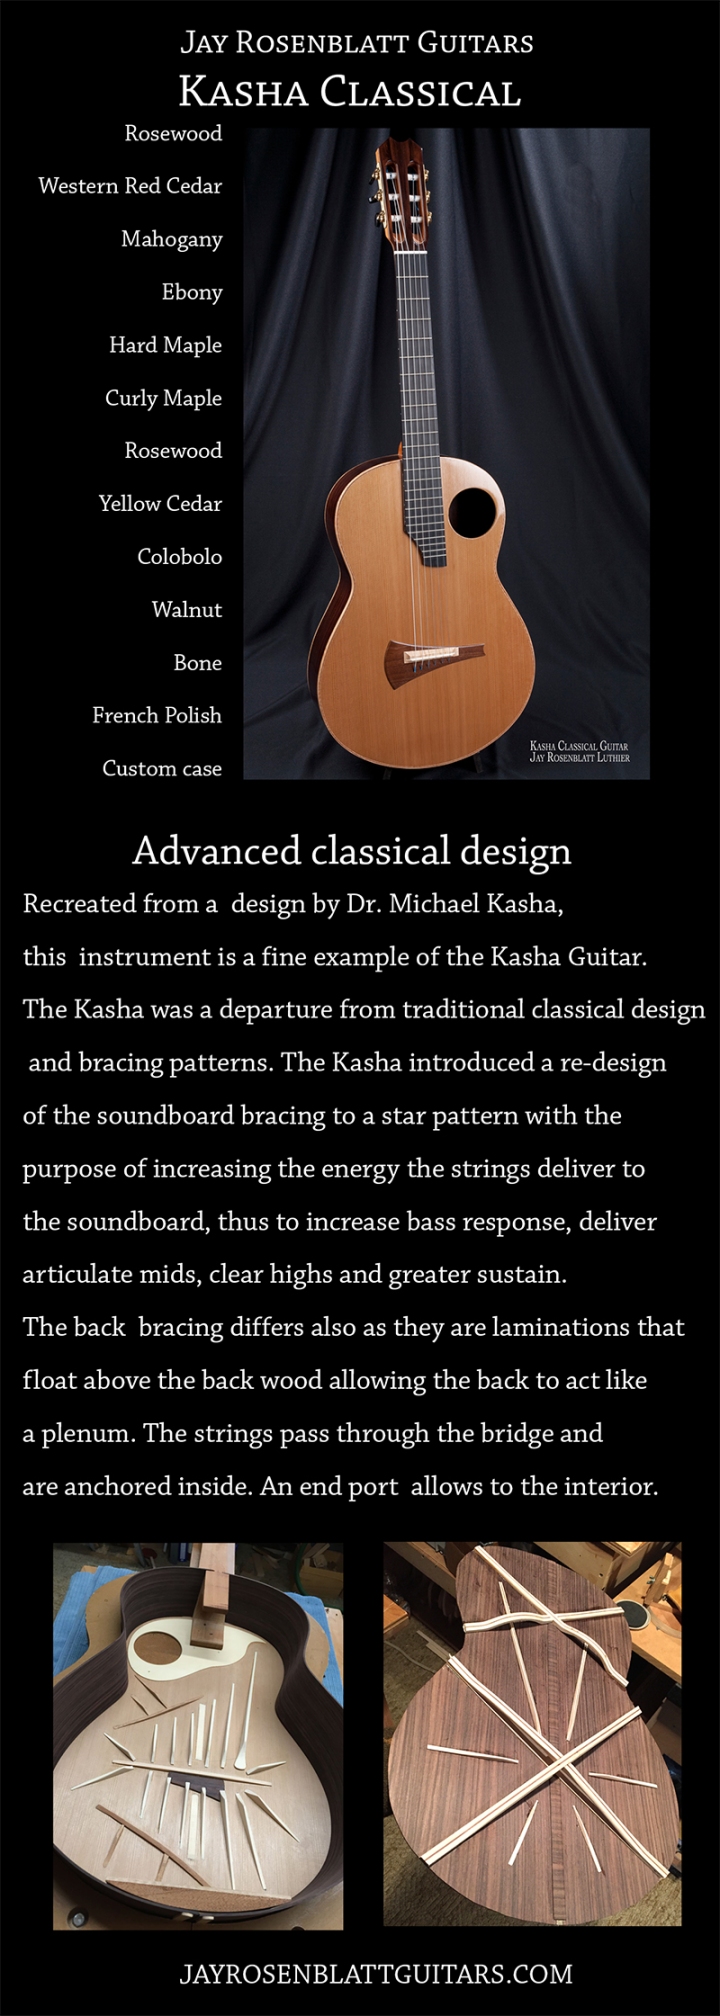 Kasha Classical built by Jay Rosenblatt